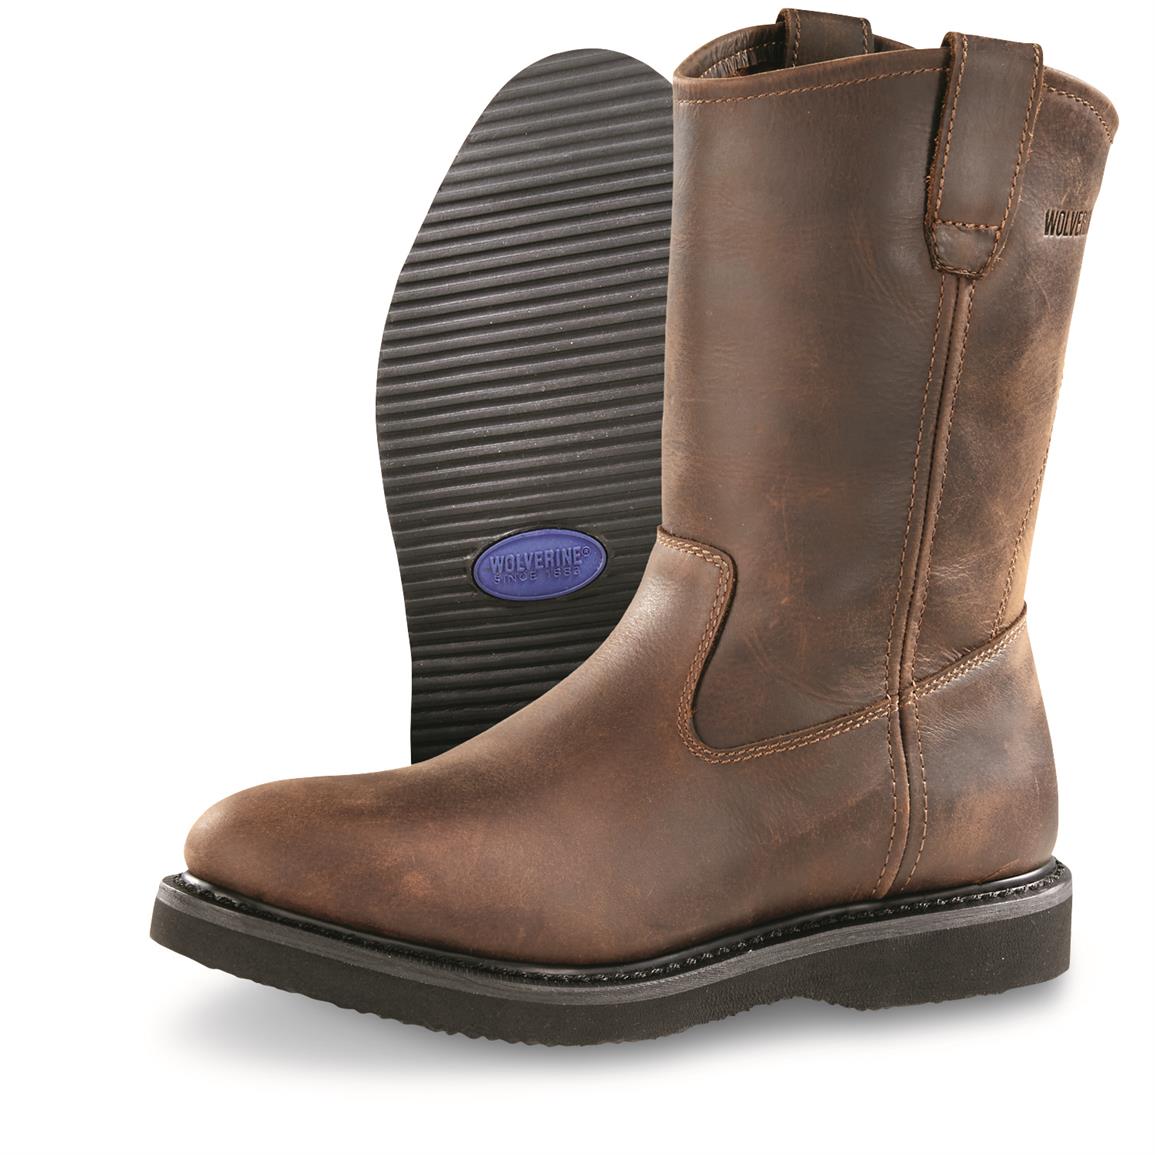 wellington boots full-grain nubuck leather uppers stand up tough qmjvszu